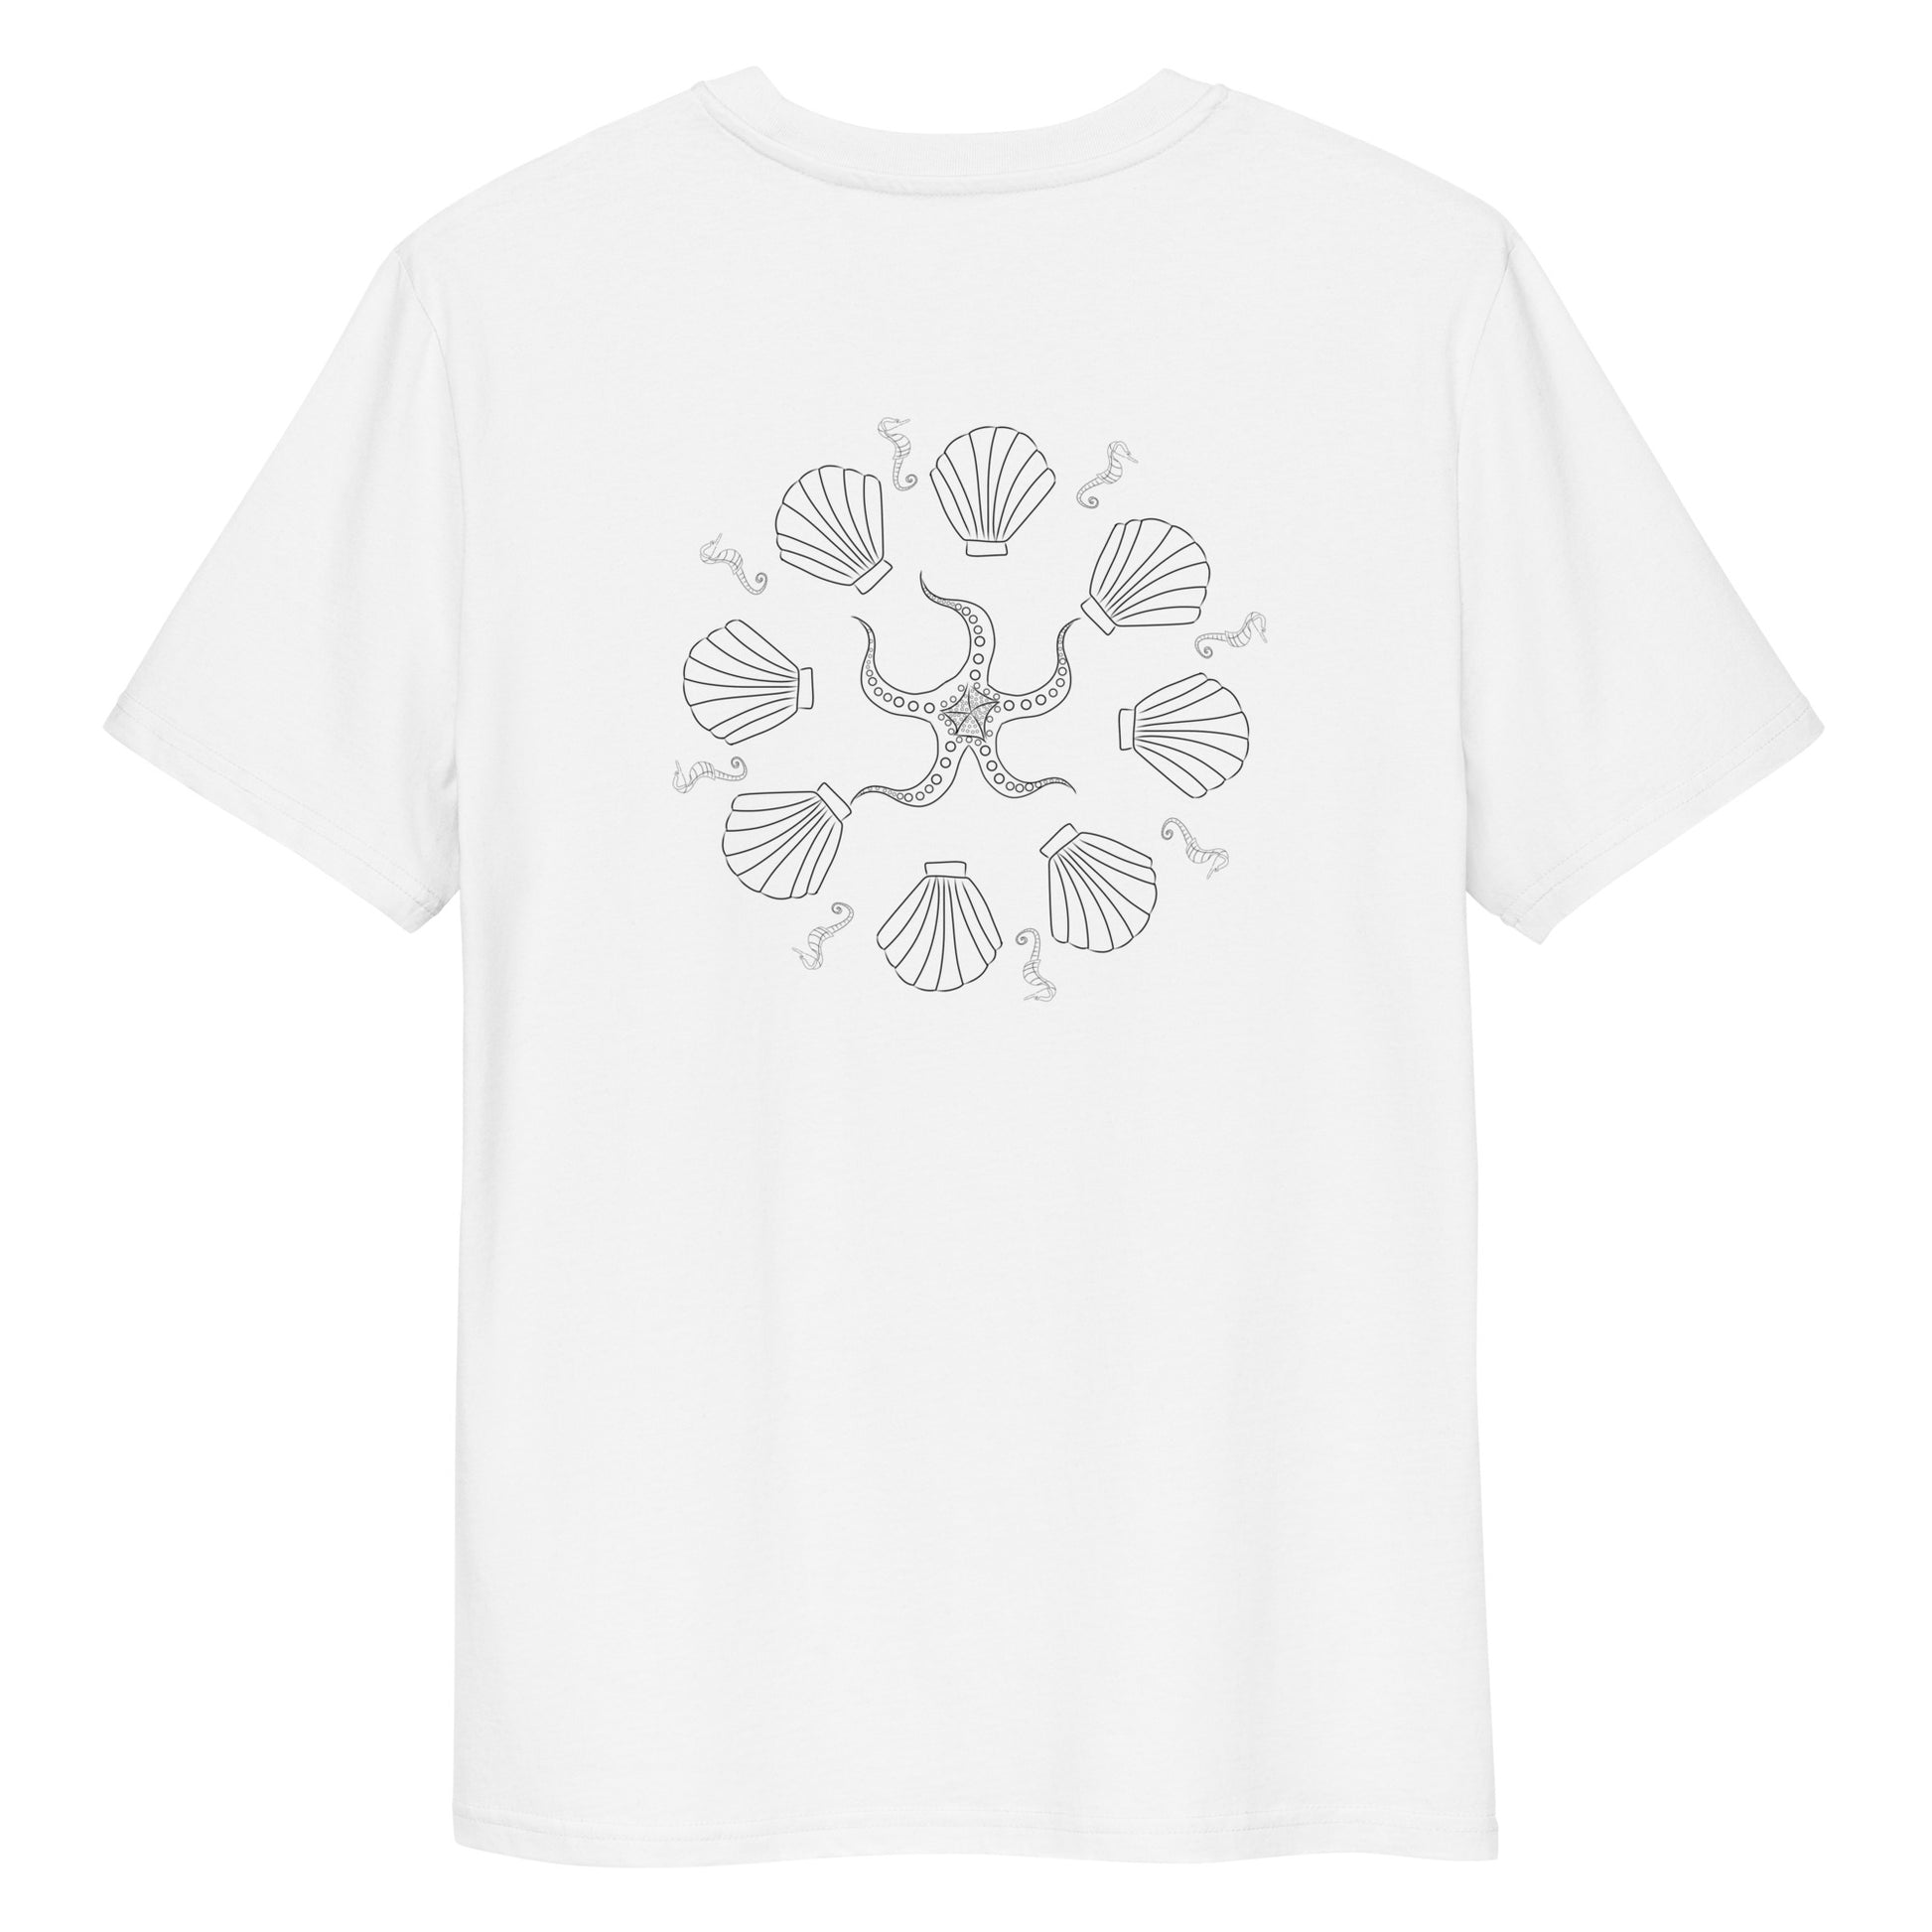 Ocean Symphony | 100% Organic Cotton T Shirt in white back